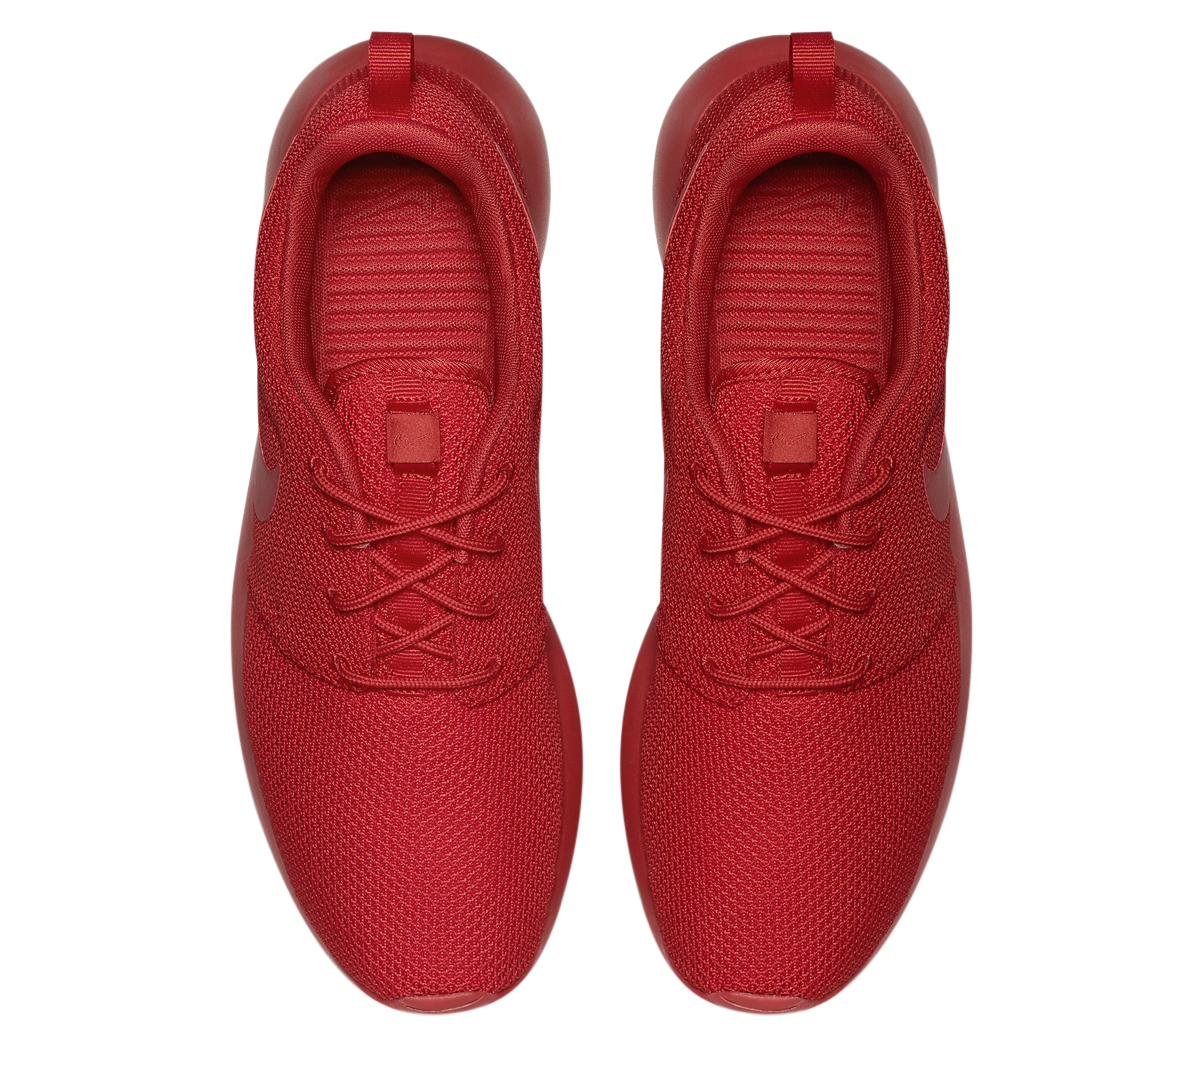 Nike Roshe Run Triple Red 511881-666